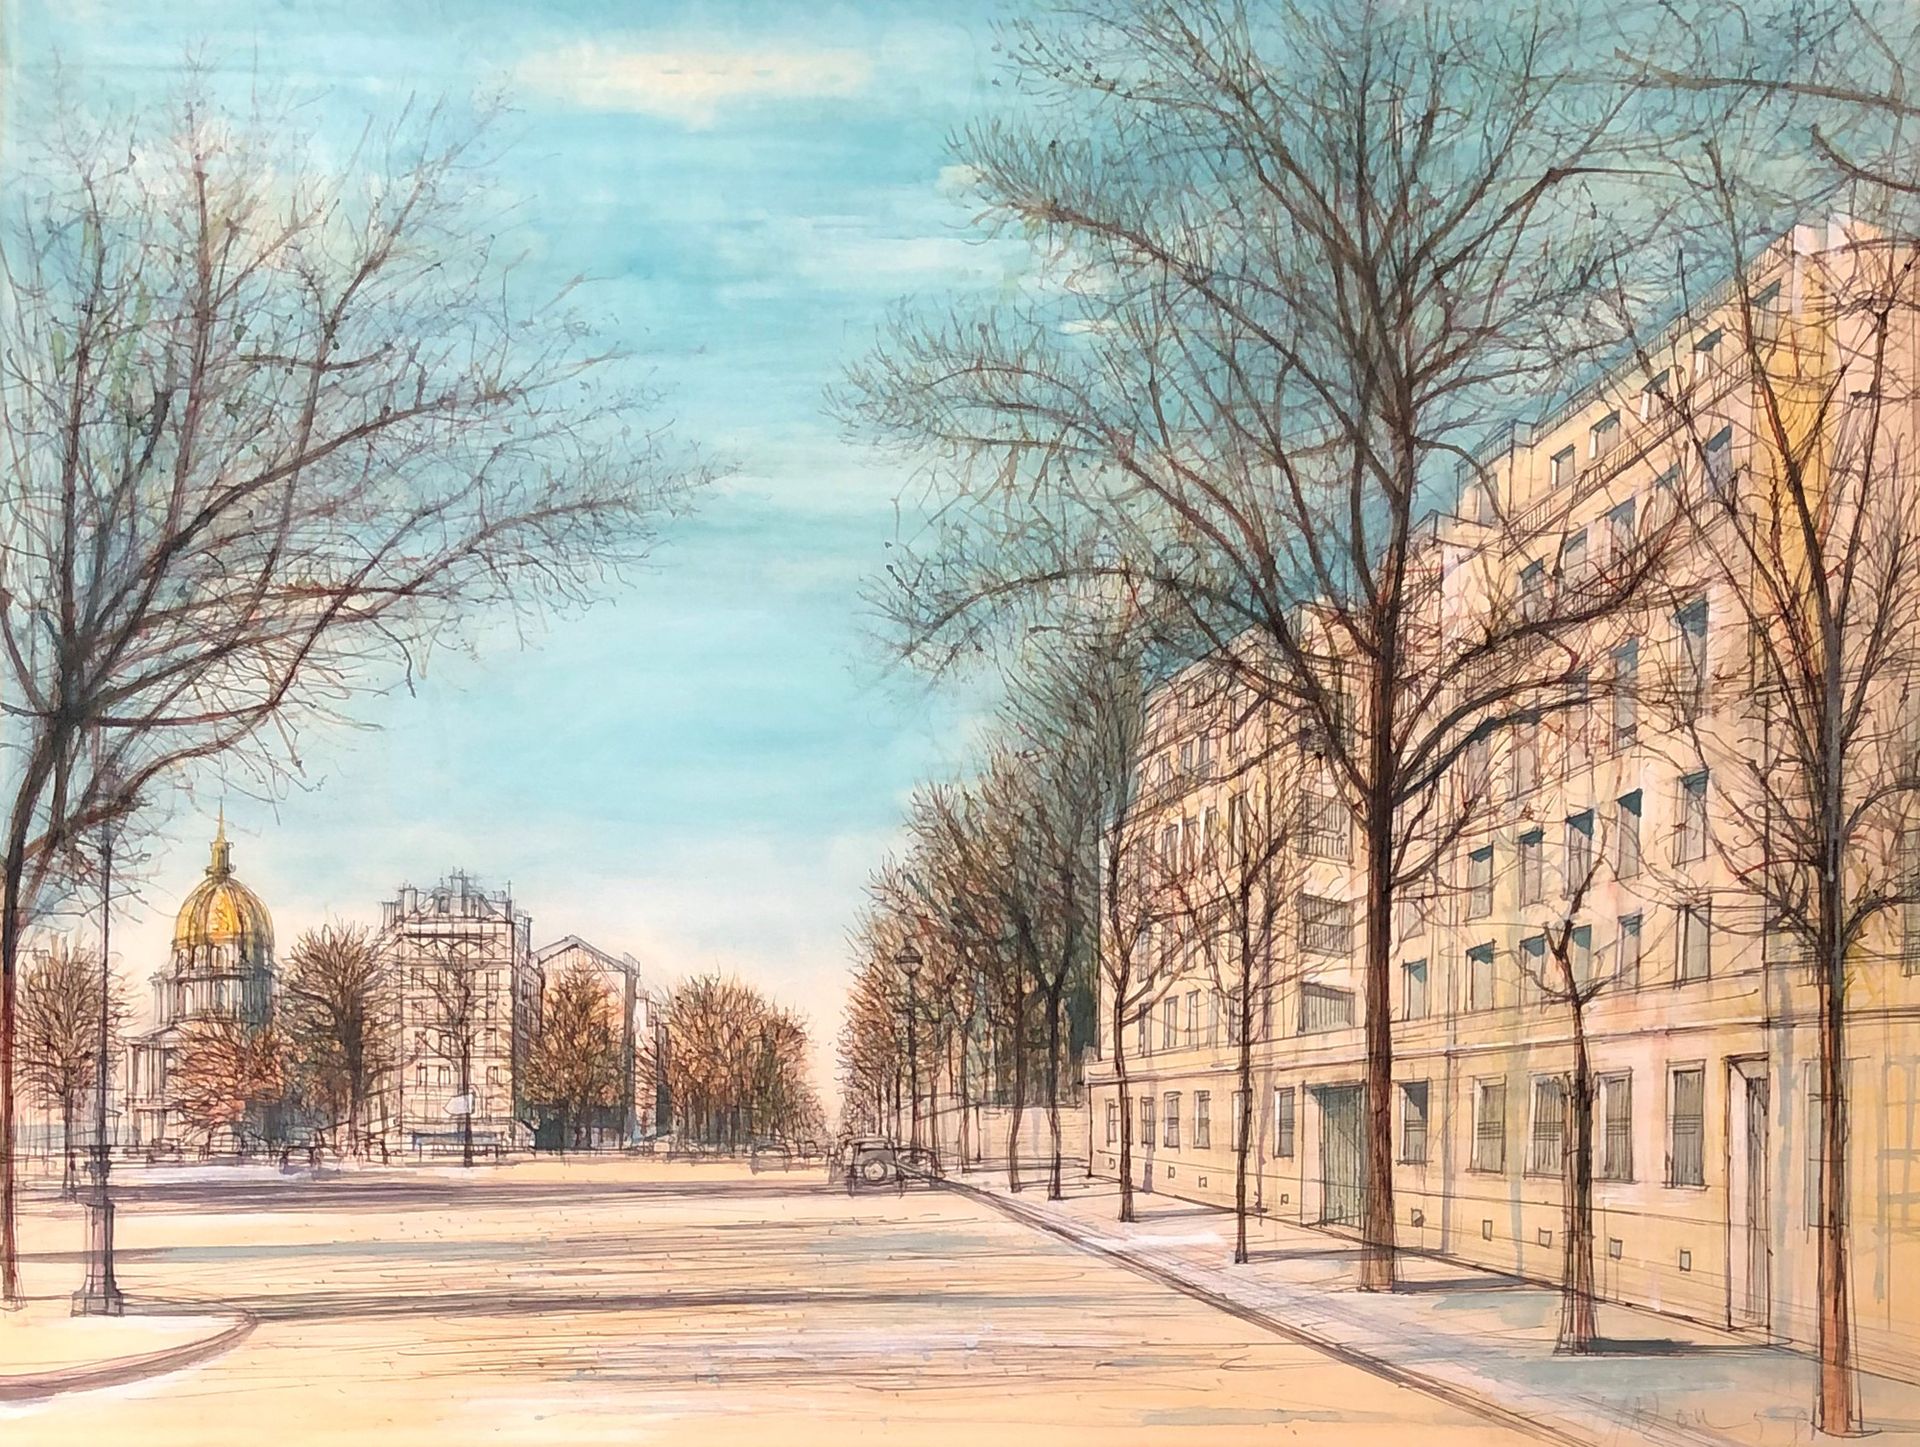 Null Jean CARZOU (1907-2000)

Roussel Uclaf, Boulevard des Invalides in Paris, 1&hellip;